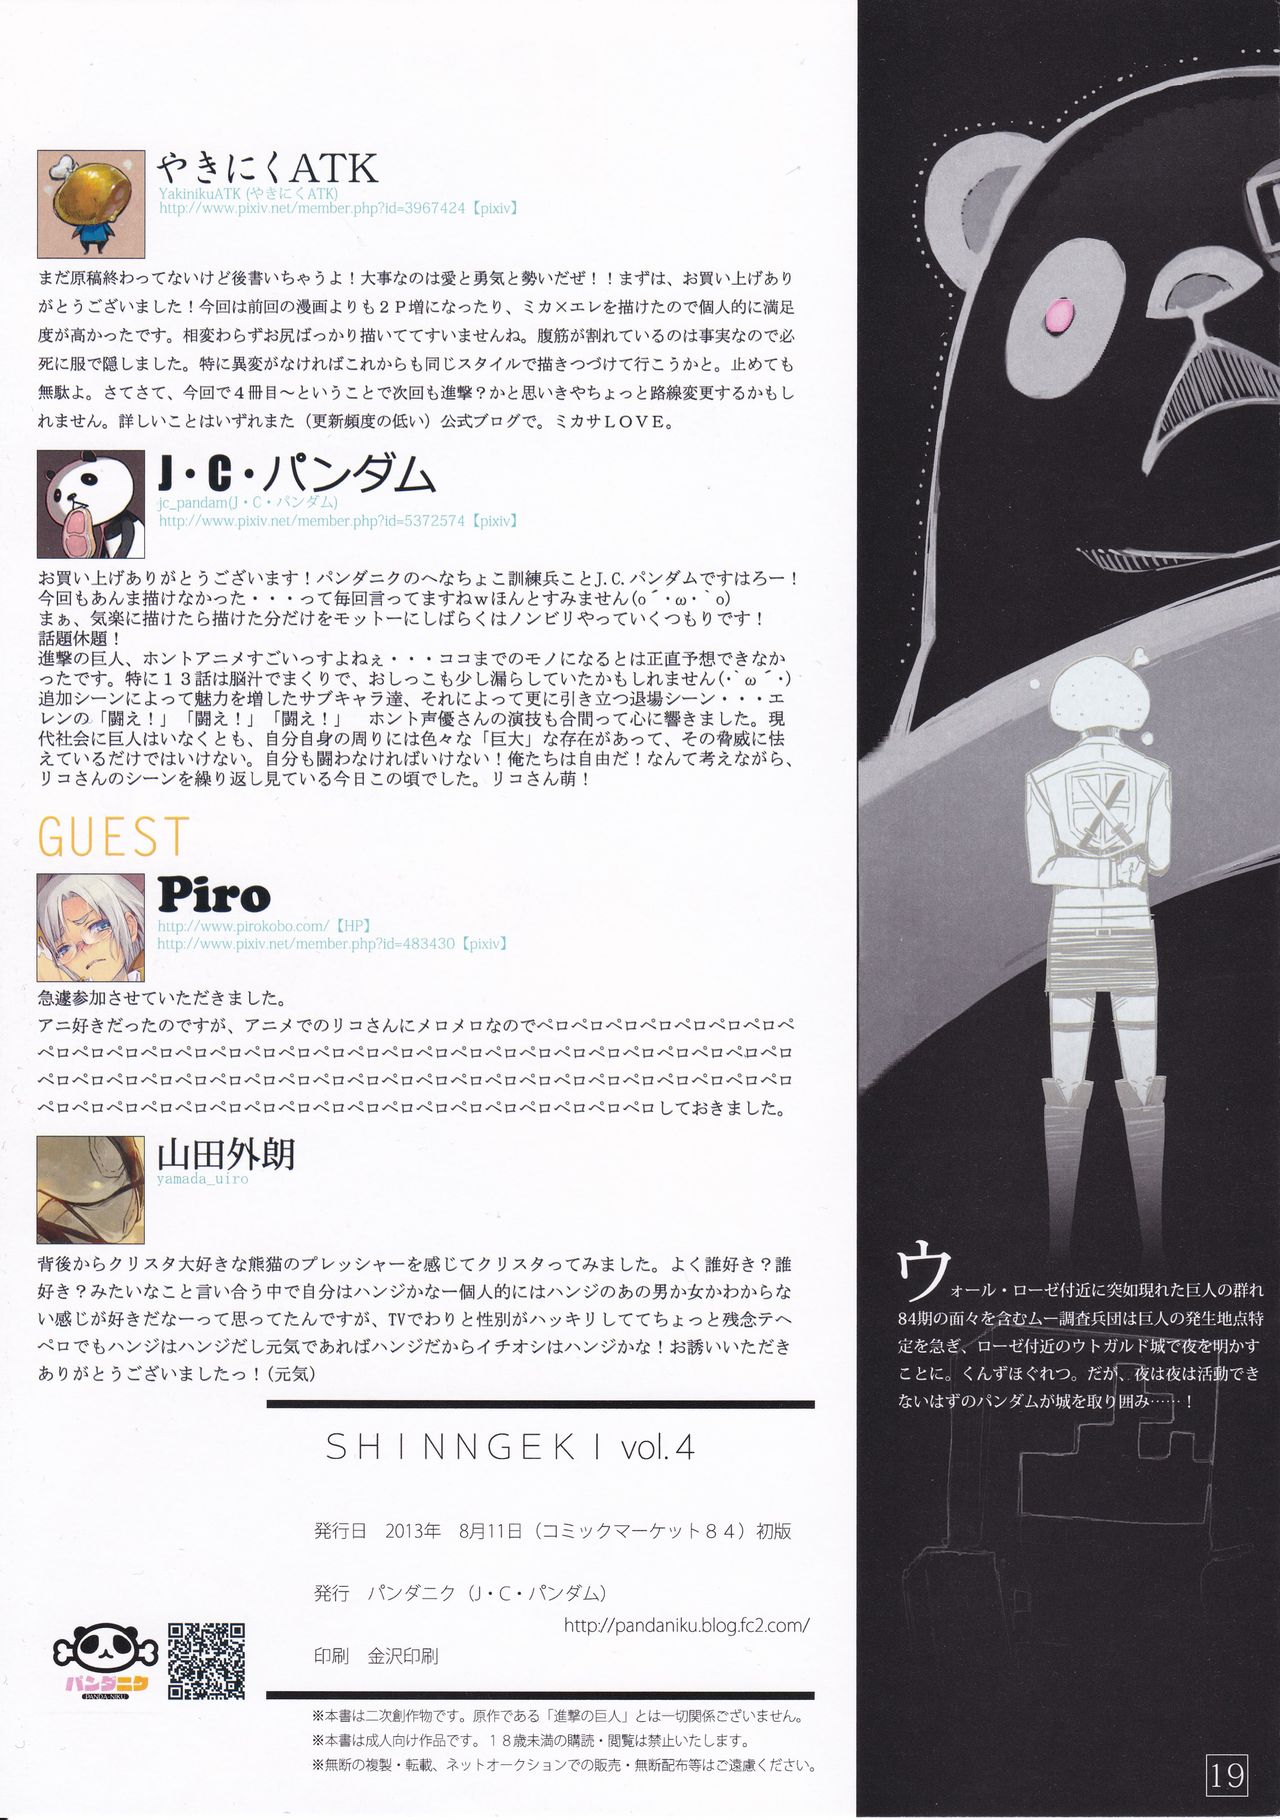 SHINNGEKI vol. 4 numero d'image 18